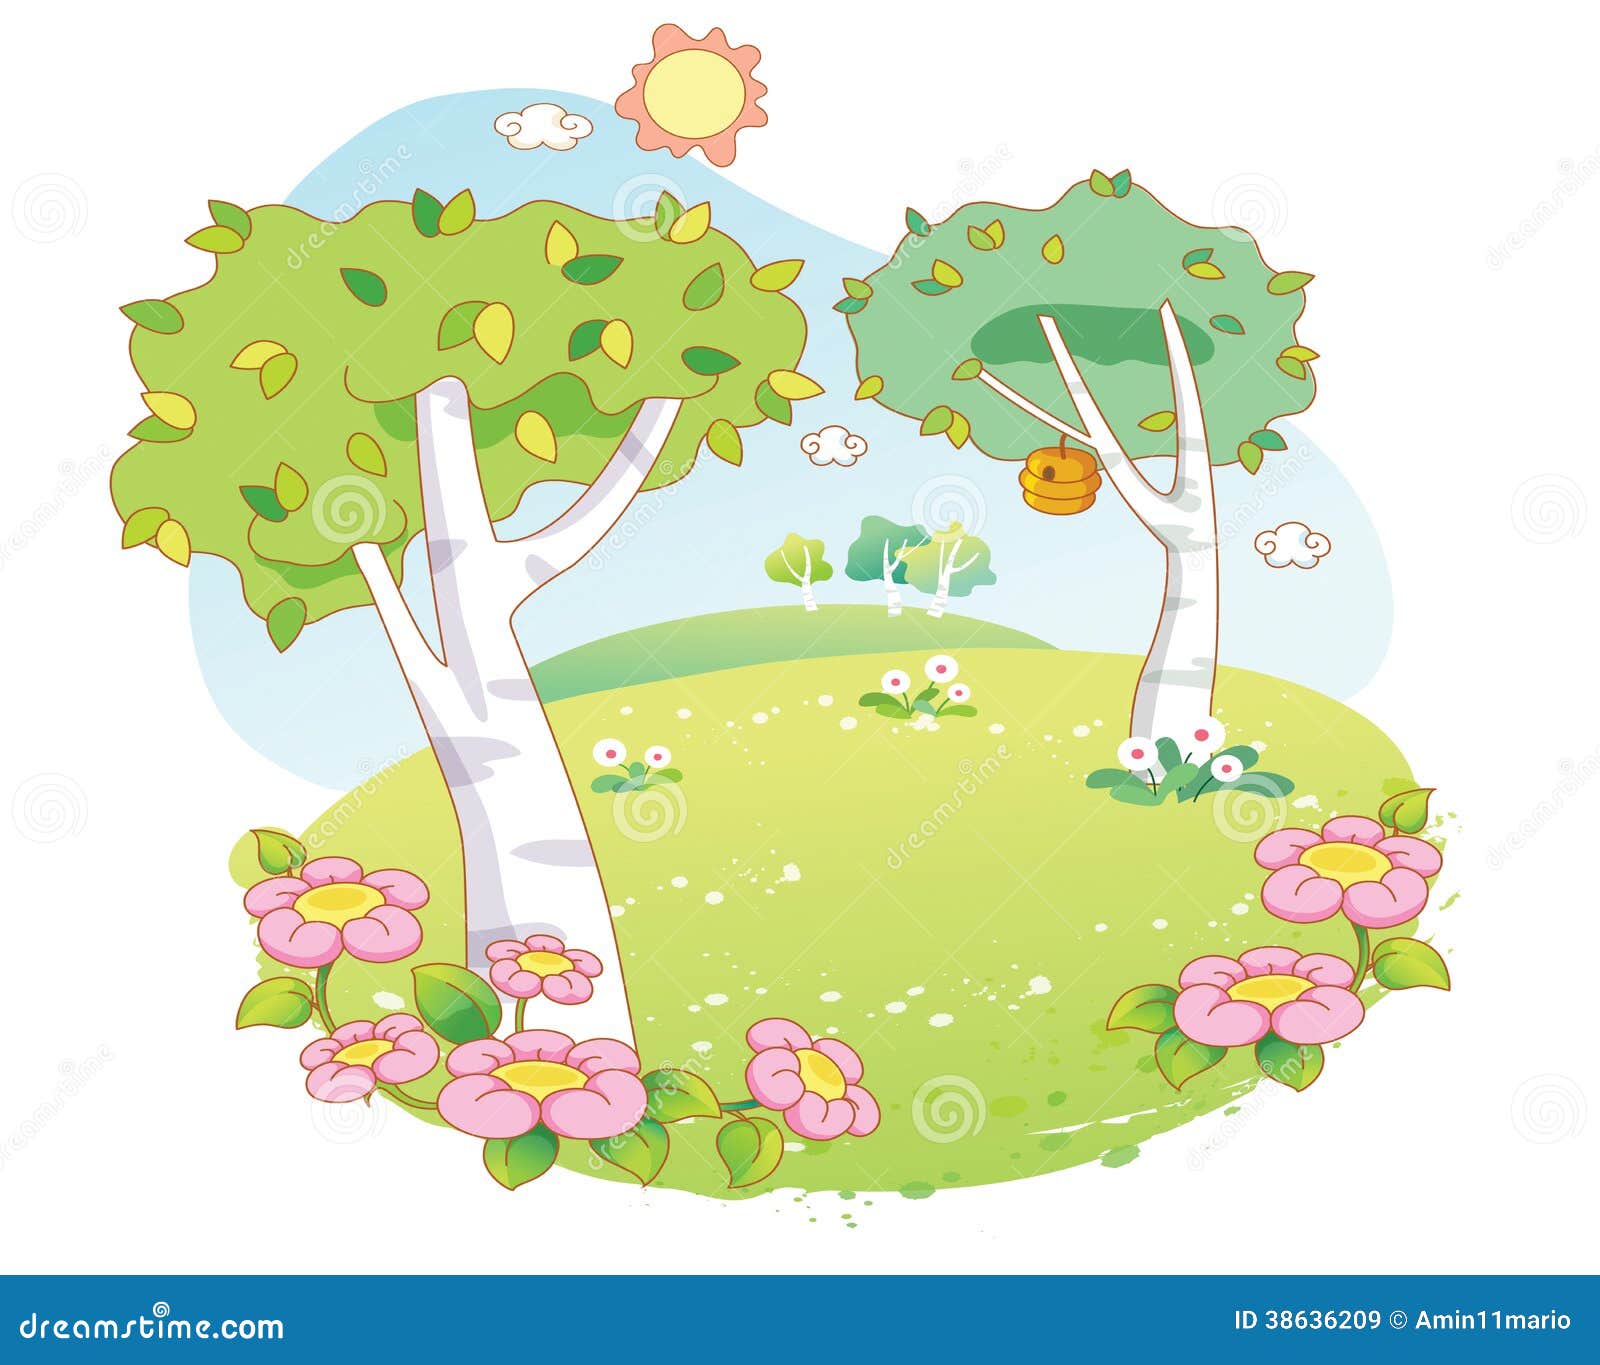 Beautiful Landscape Trees Cartoon Royalty Free Stock Images - Image